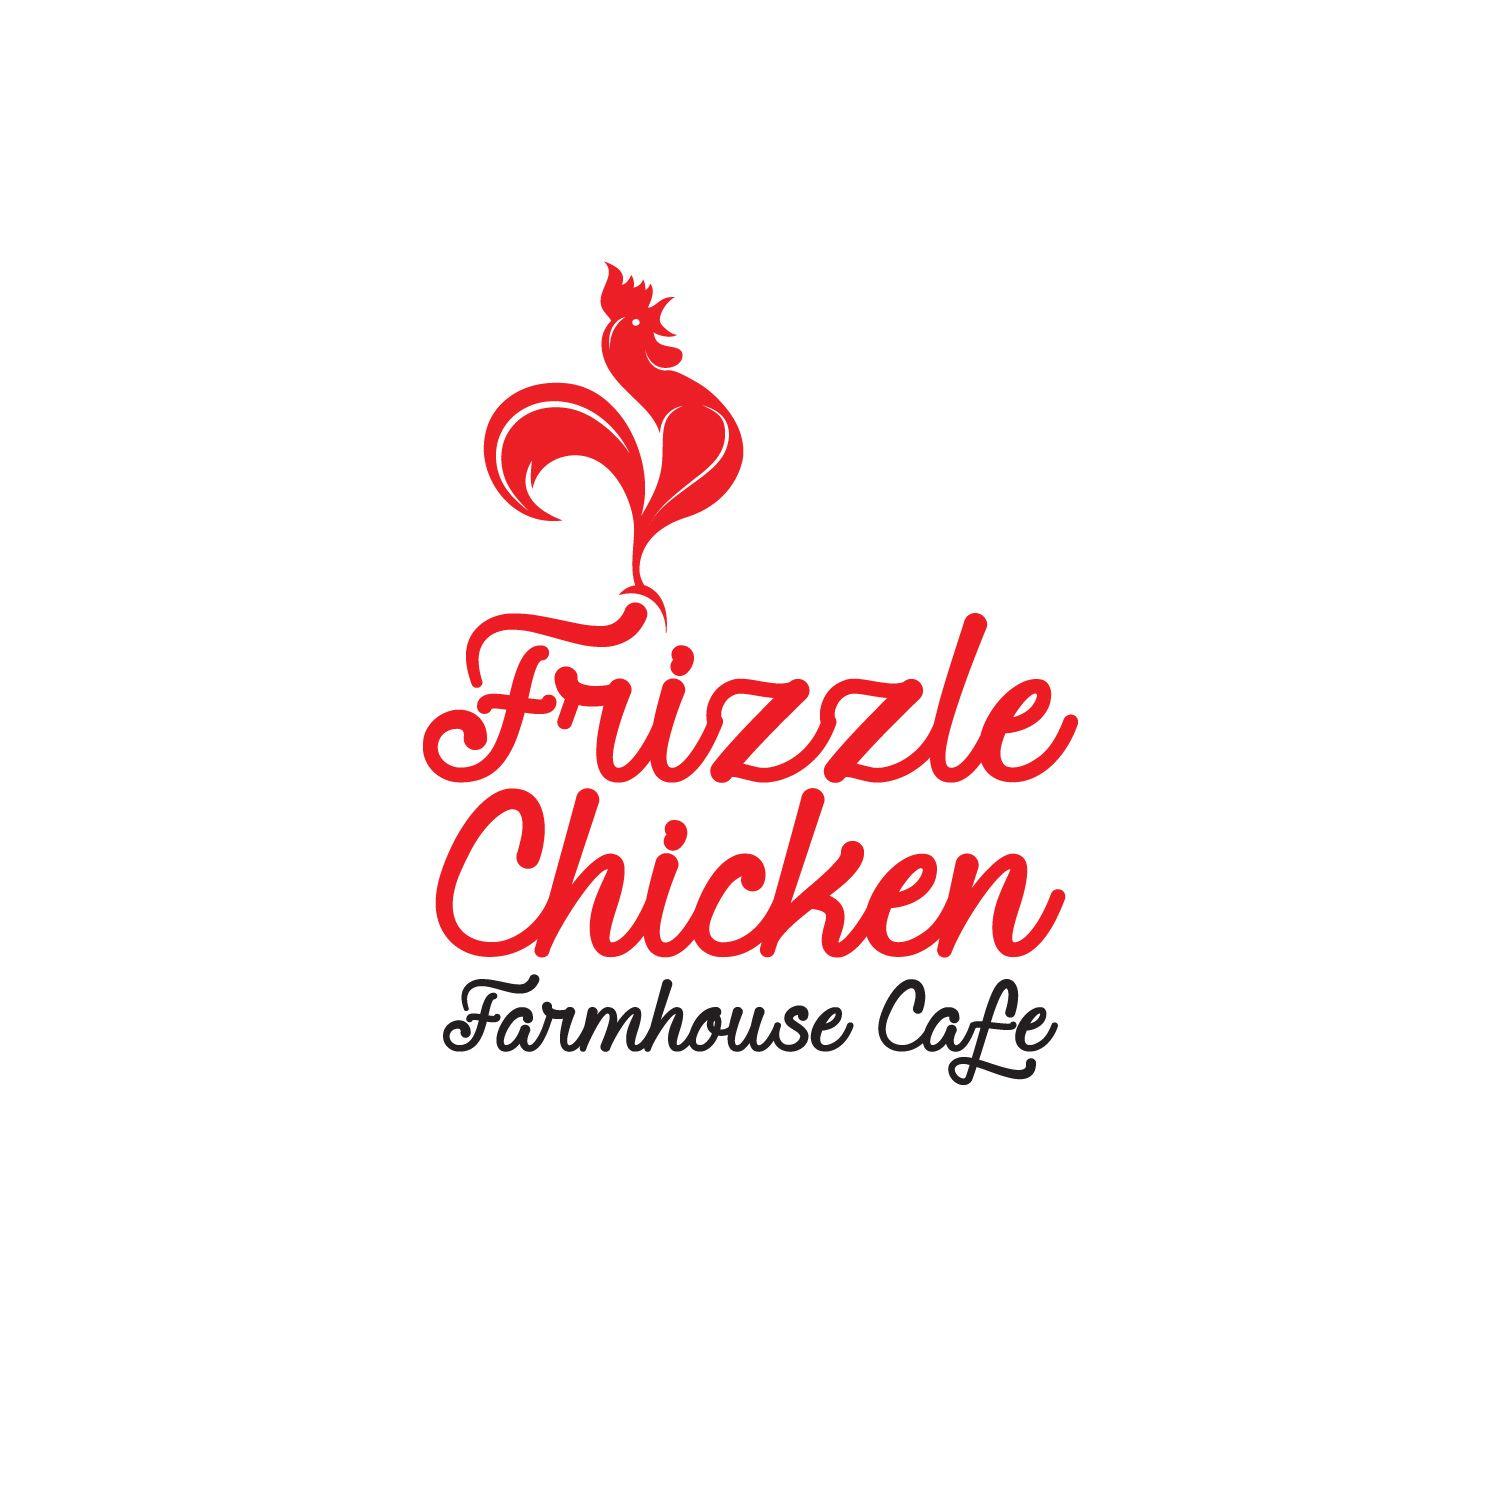 J Restaurant Logo - Playful, Personable, American Restaurant Logo Design for Frizzle ...